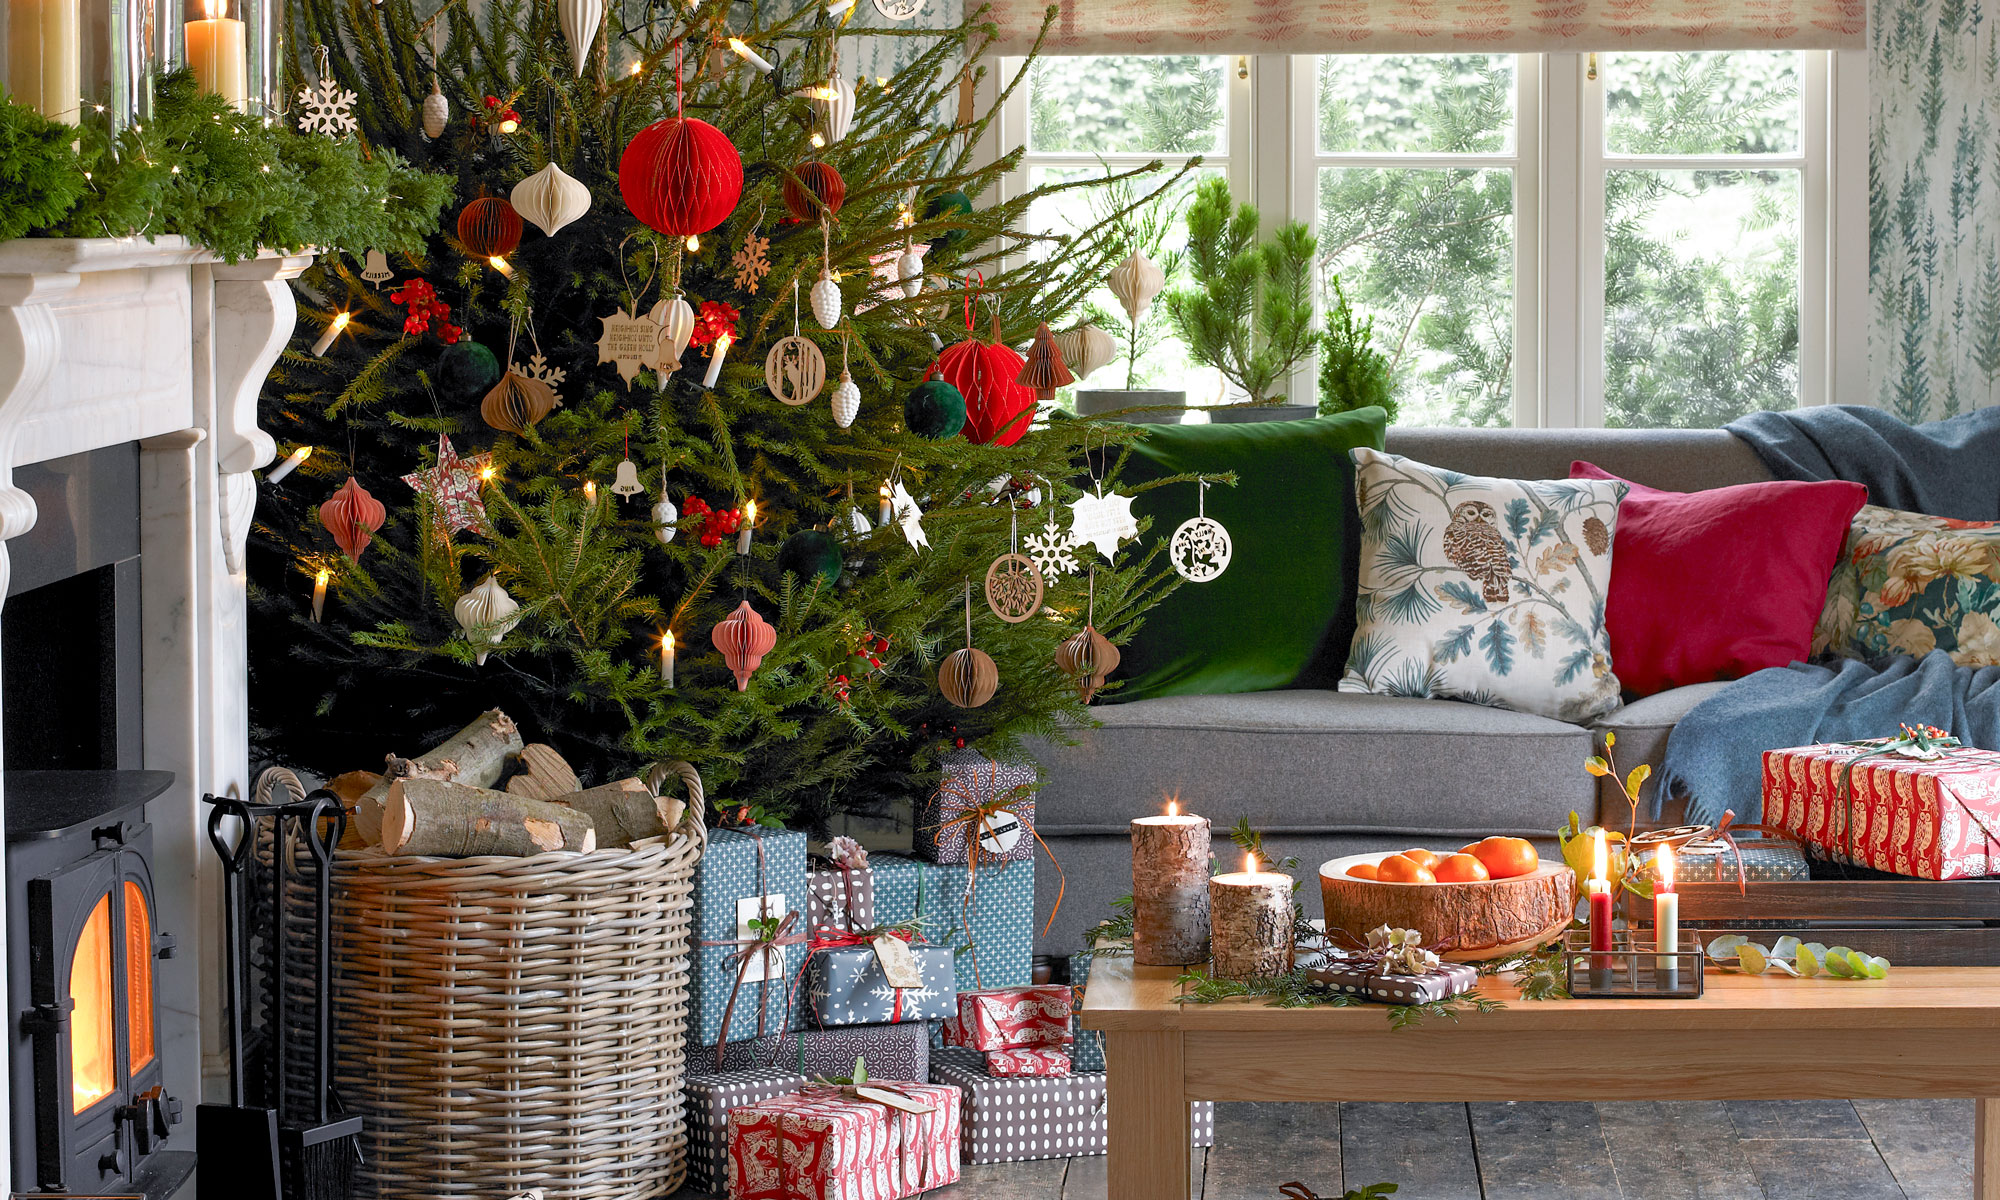 40 Easy Diy Christmas Decorations - Homemade Holiday Decor Id